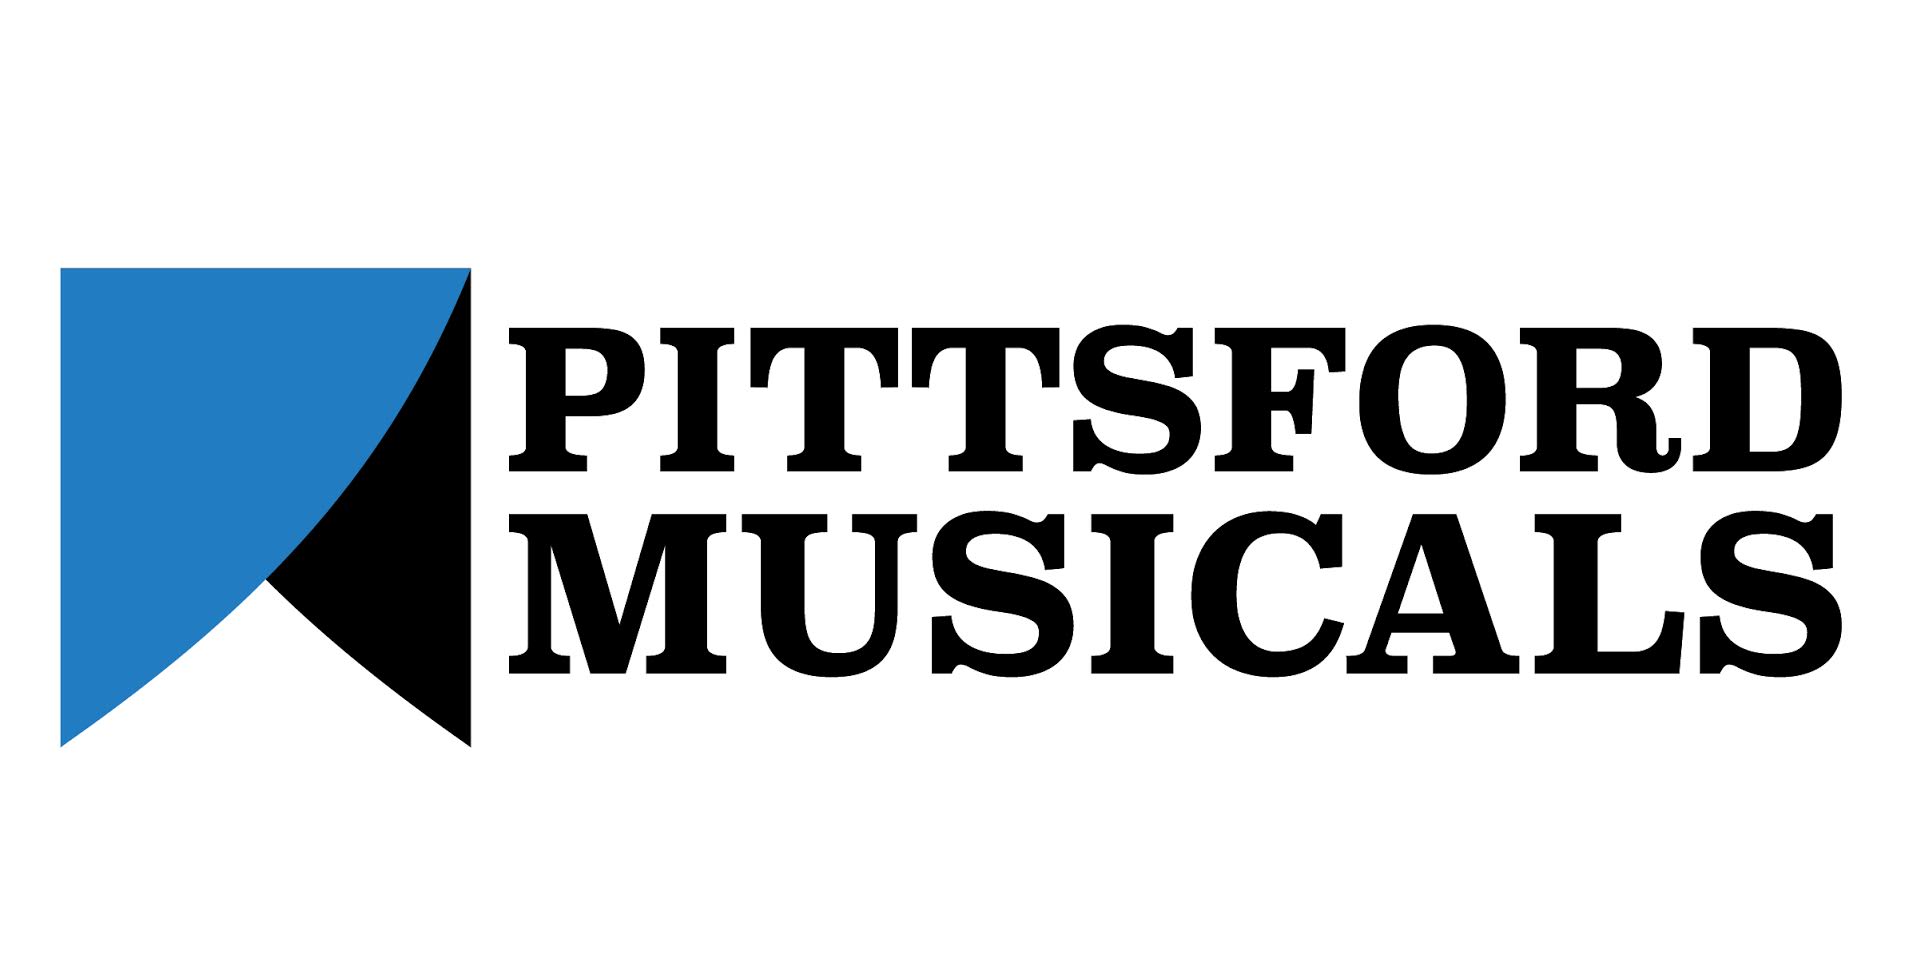 Pittsford Musicals